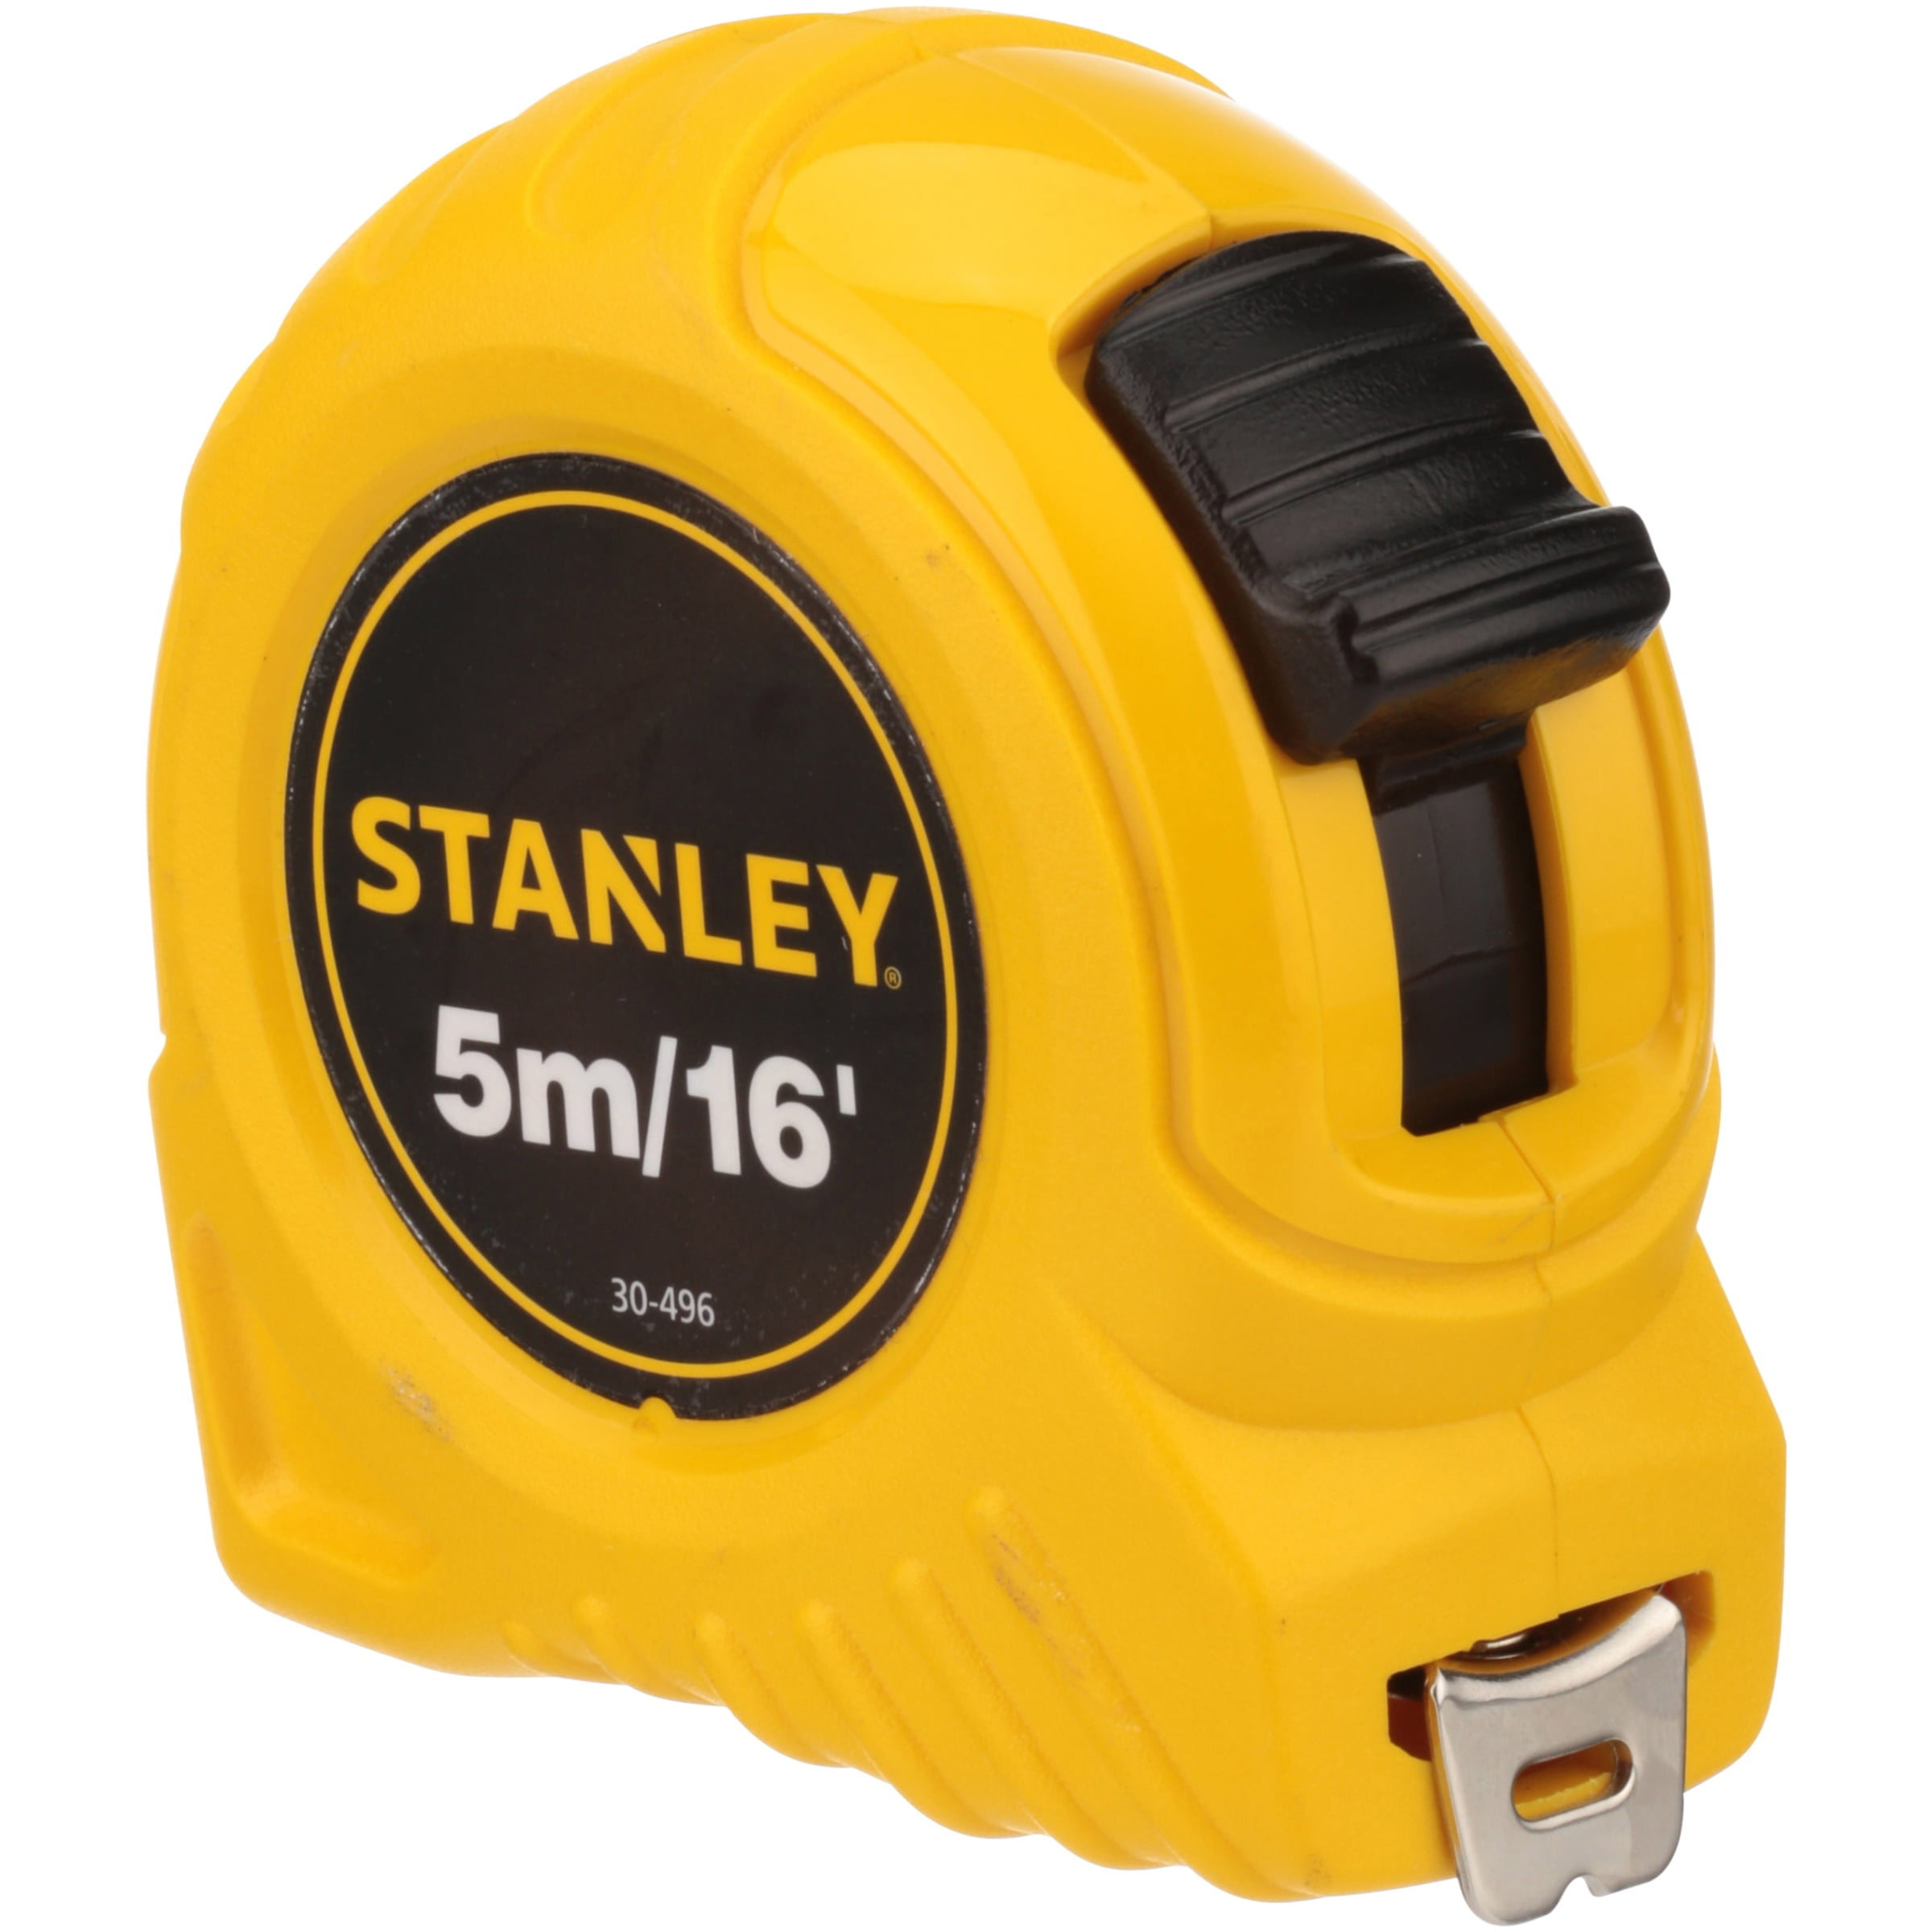 Stanley PowerLock Tape Measure Measuring Tool ABS Case Blade Lock 30 Ft X 1 Inch 